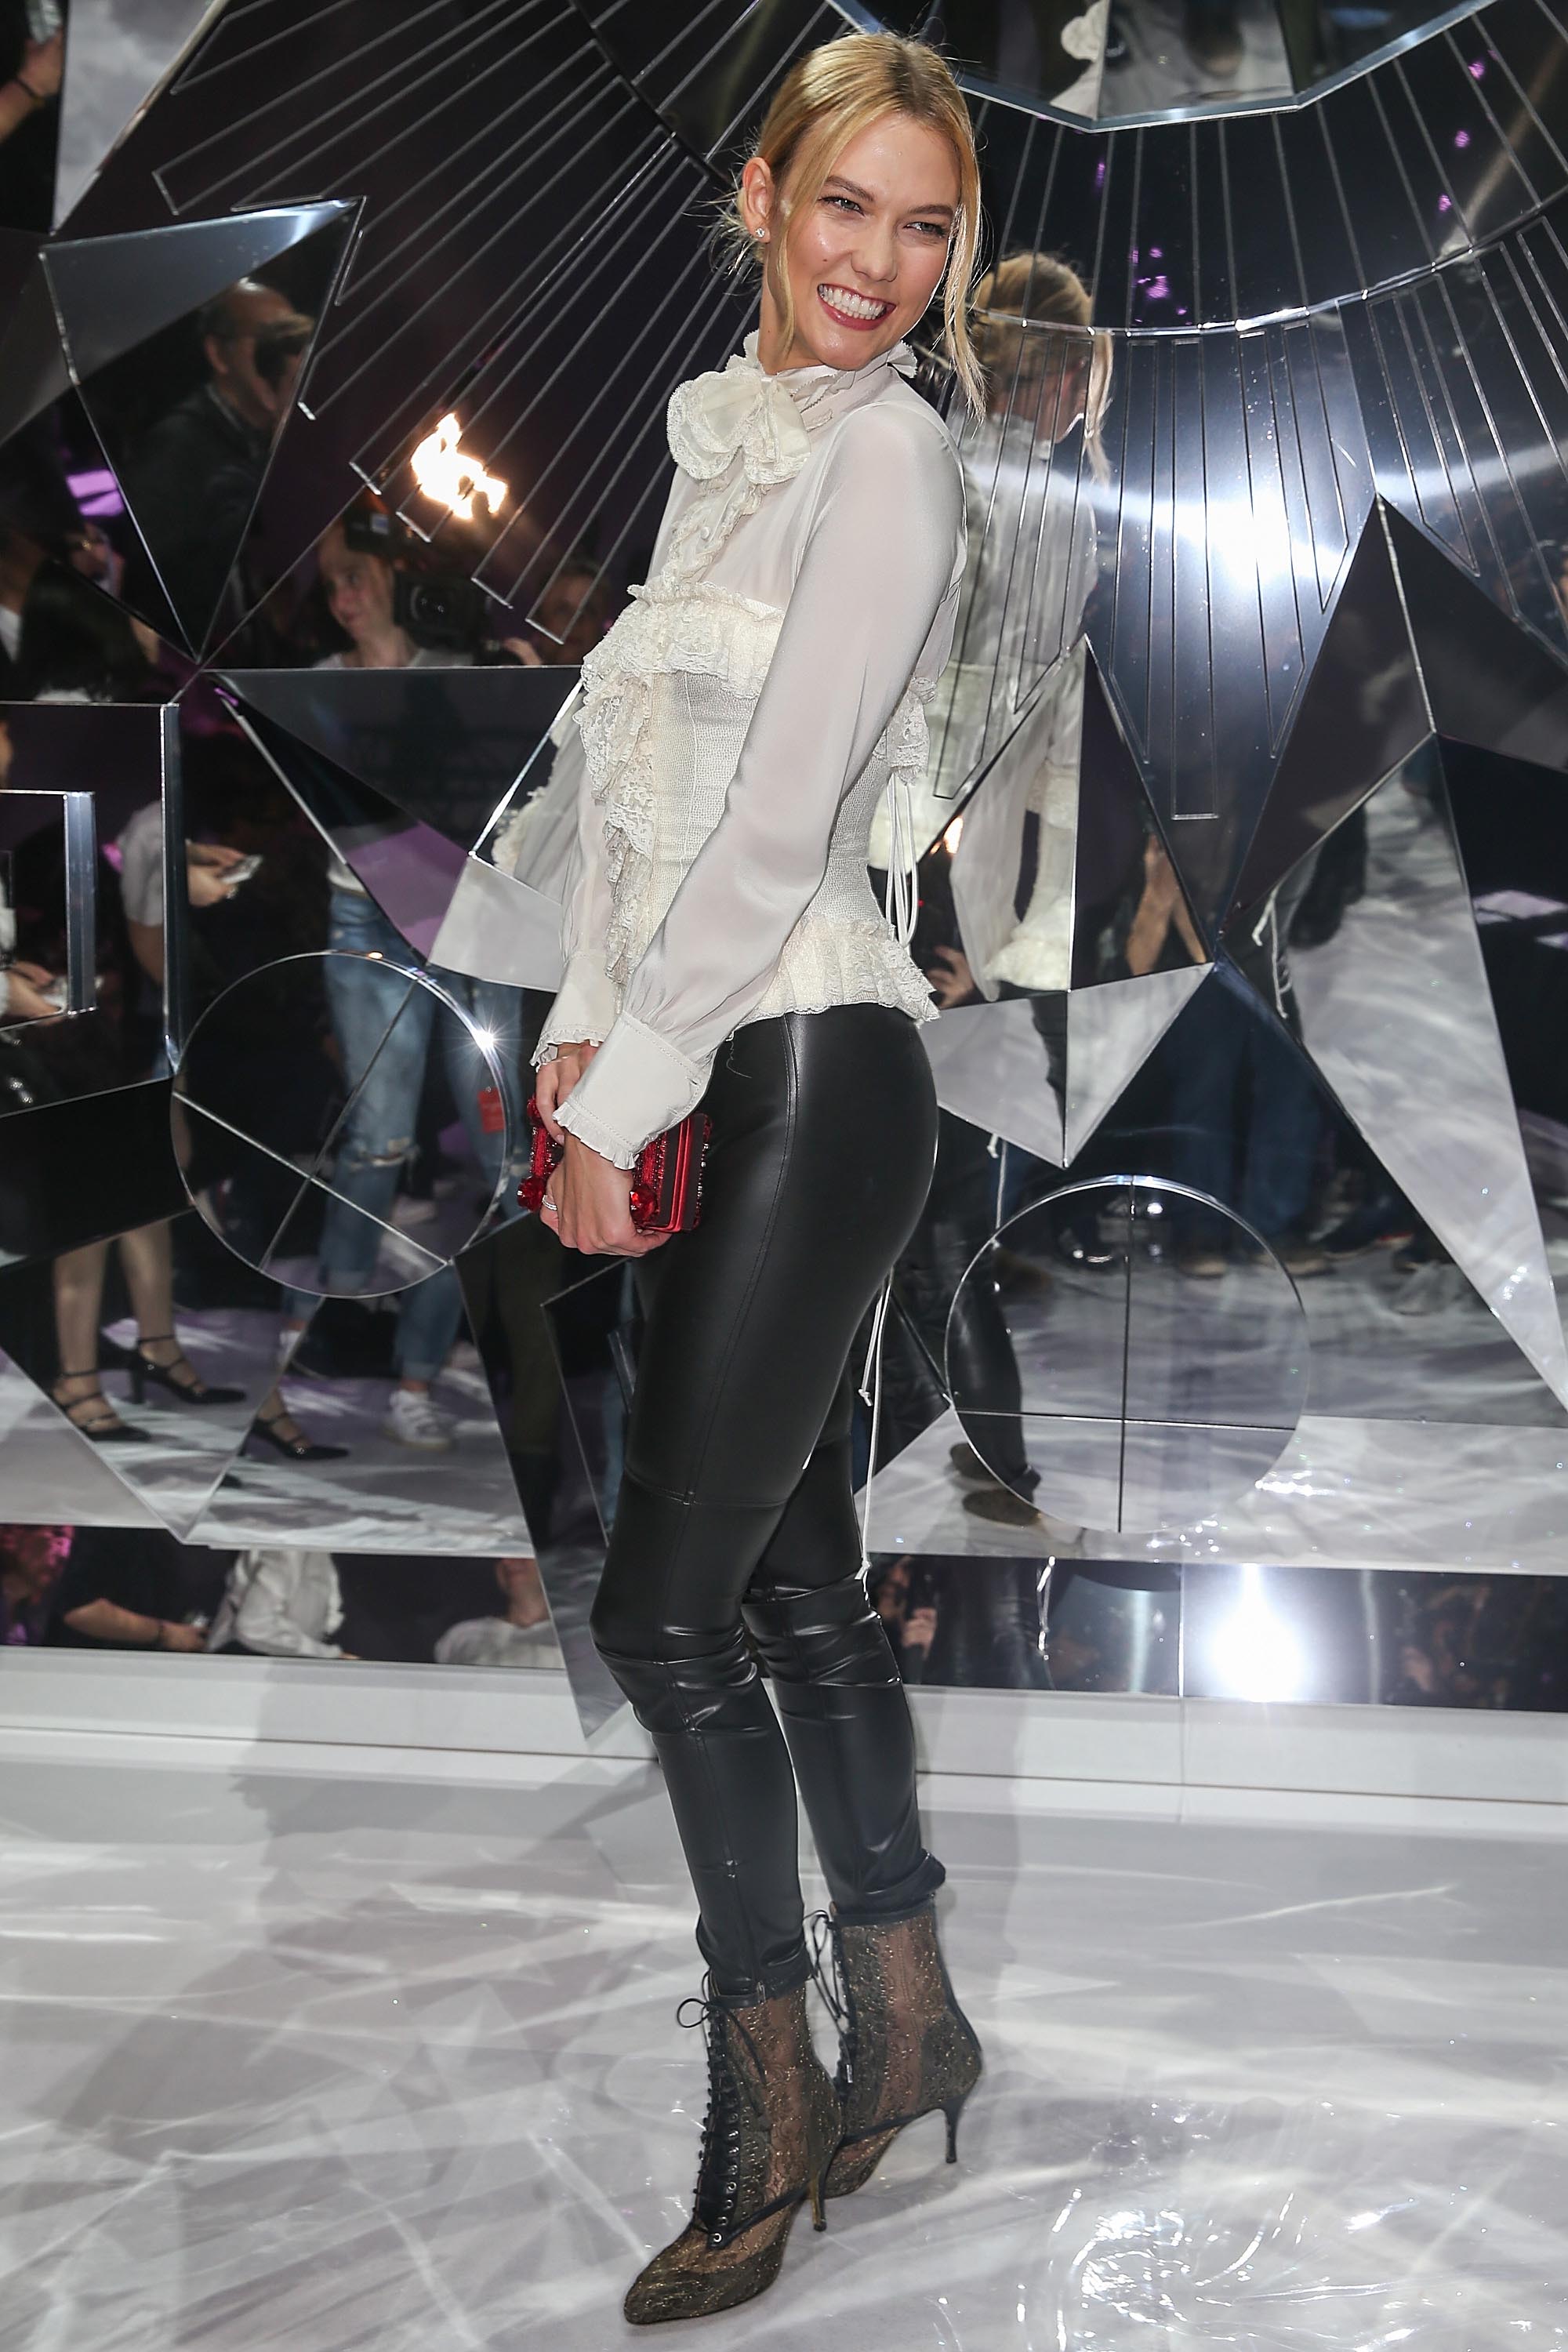 Karlie Kloss attends the Shiatzy Chen show